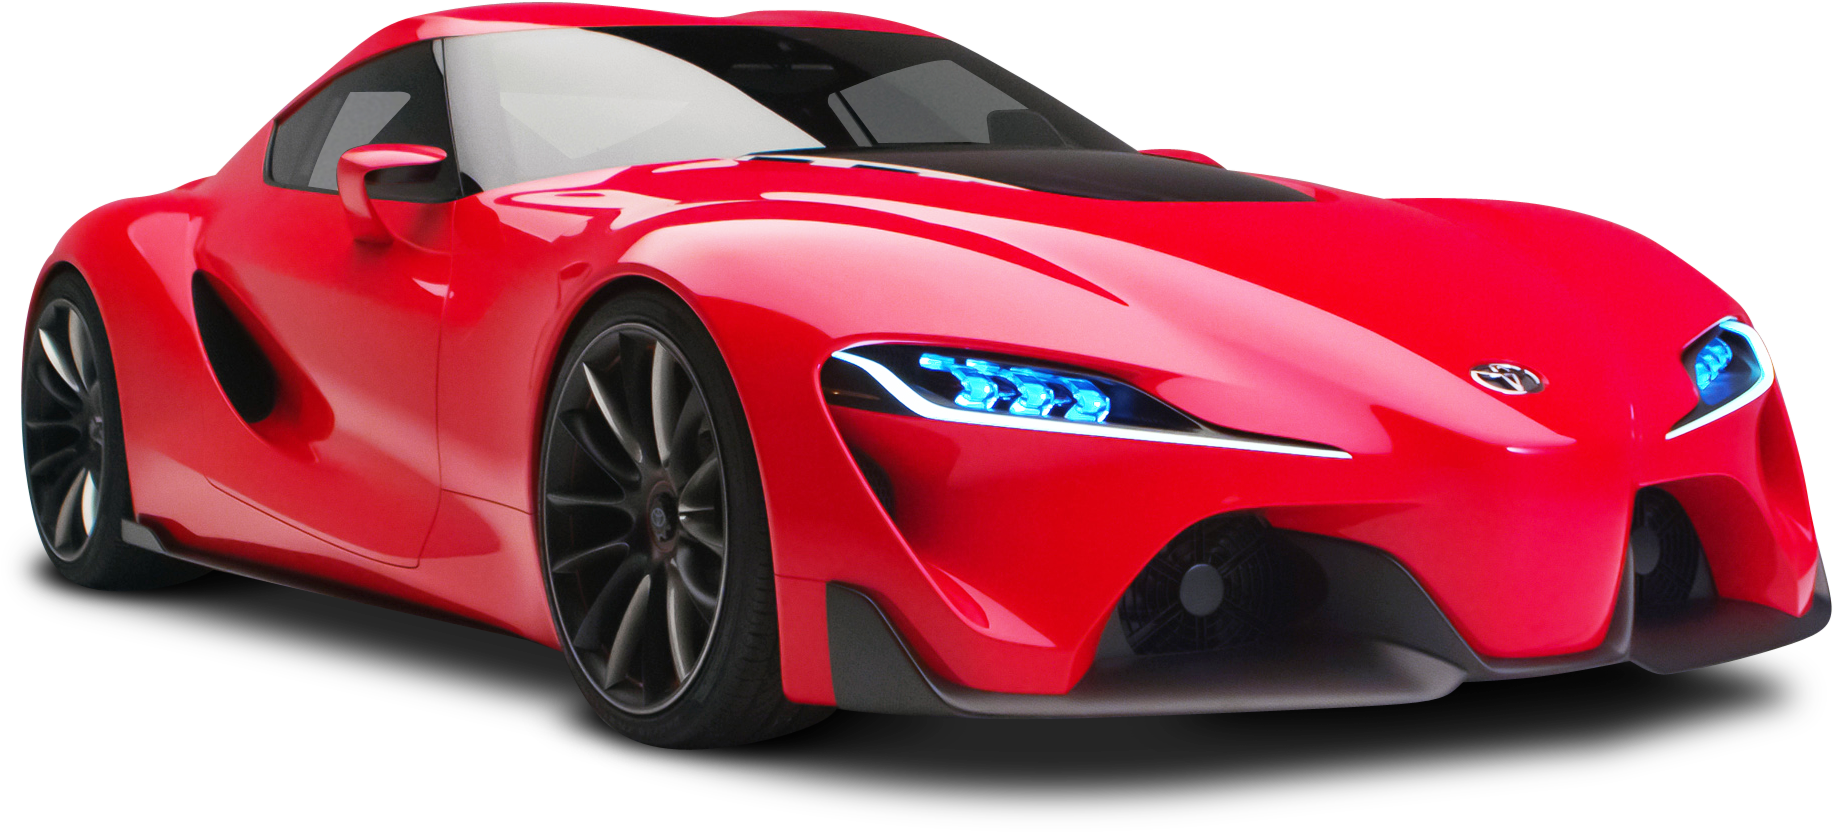 Red Toyota Supra Concept Car